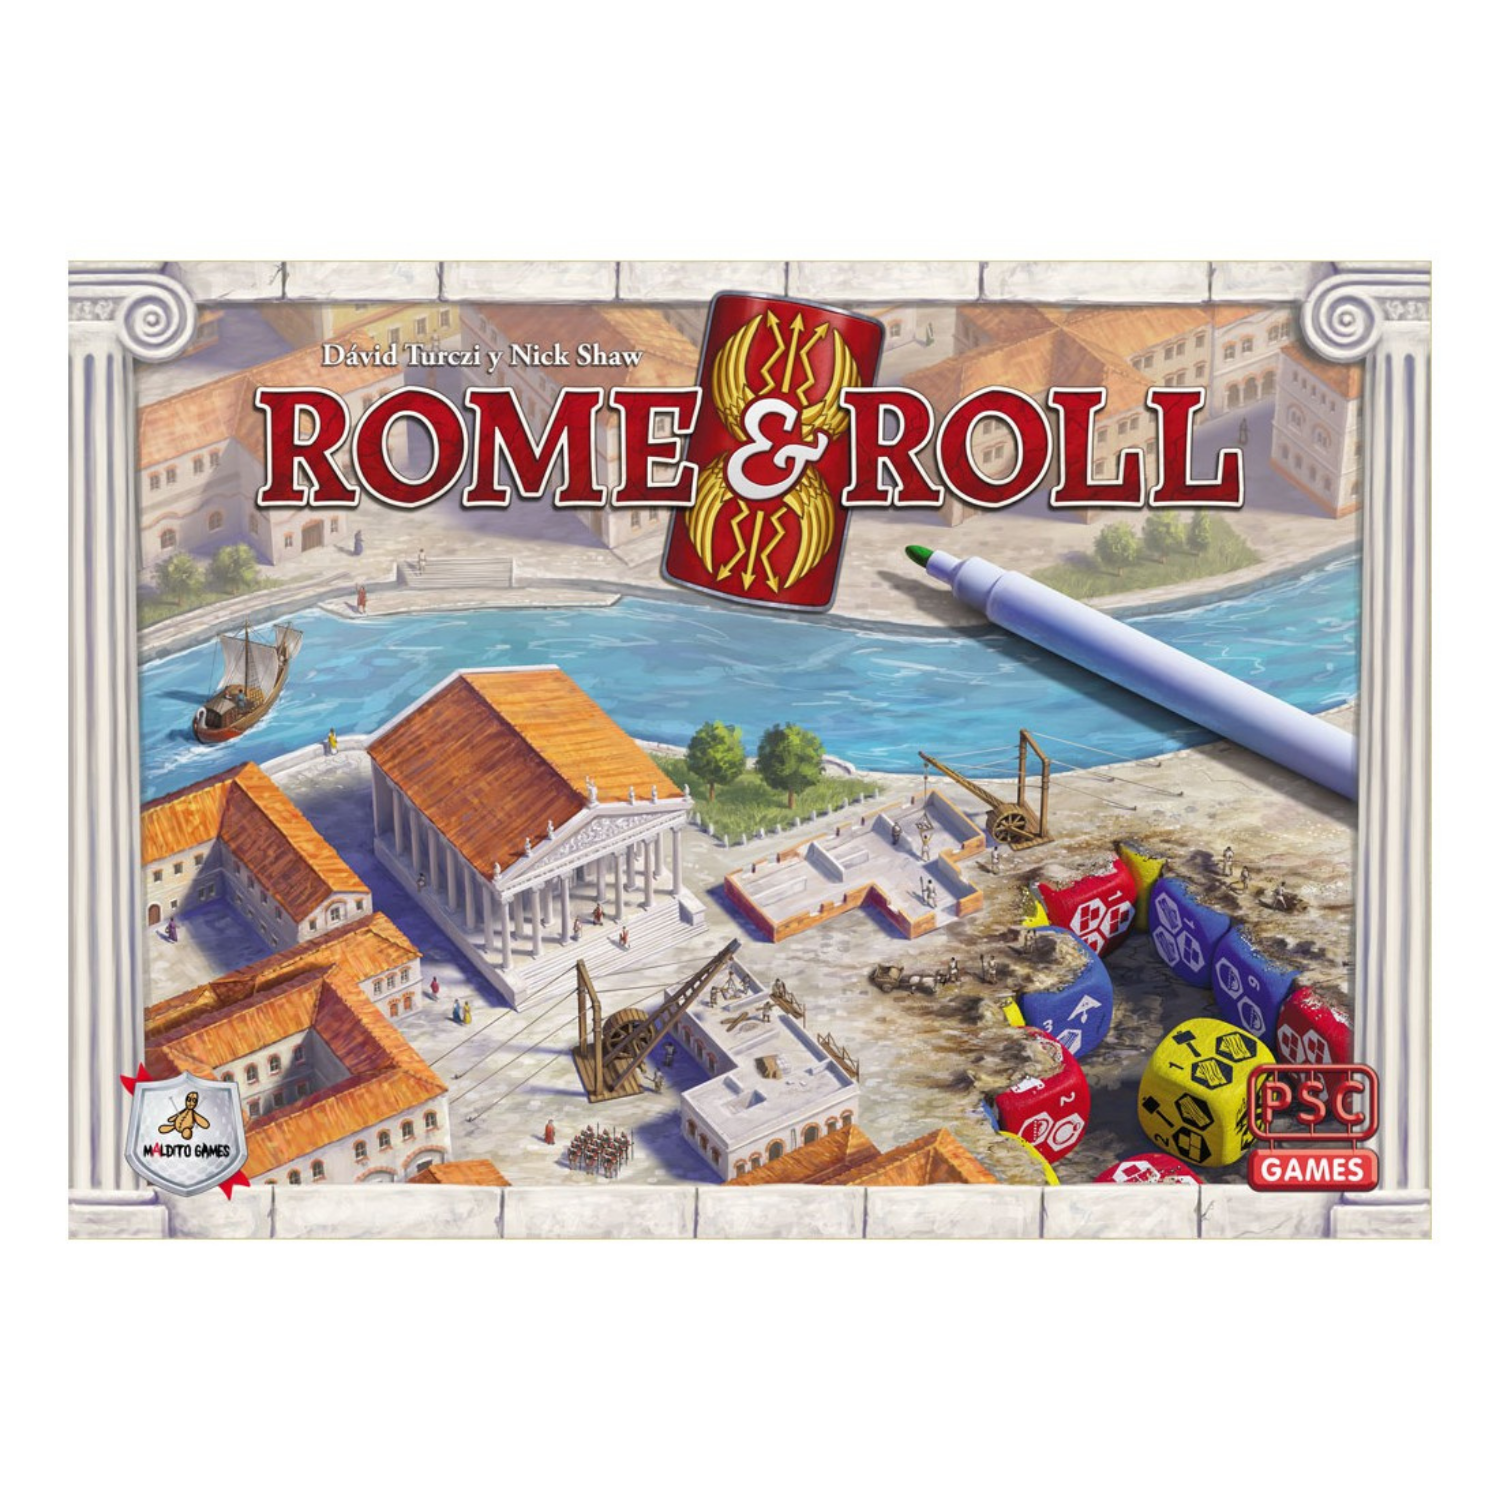 ROME & ROLL